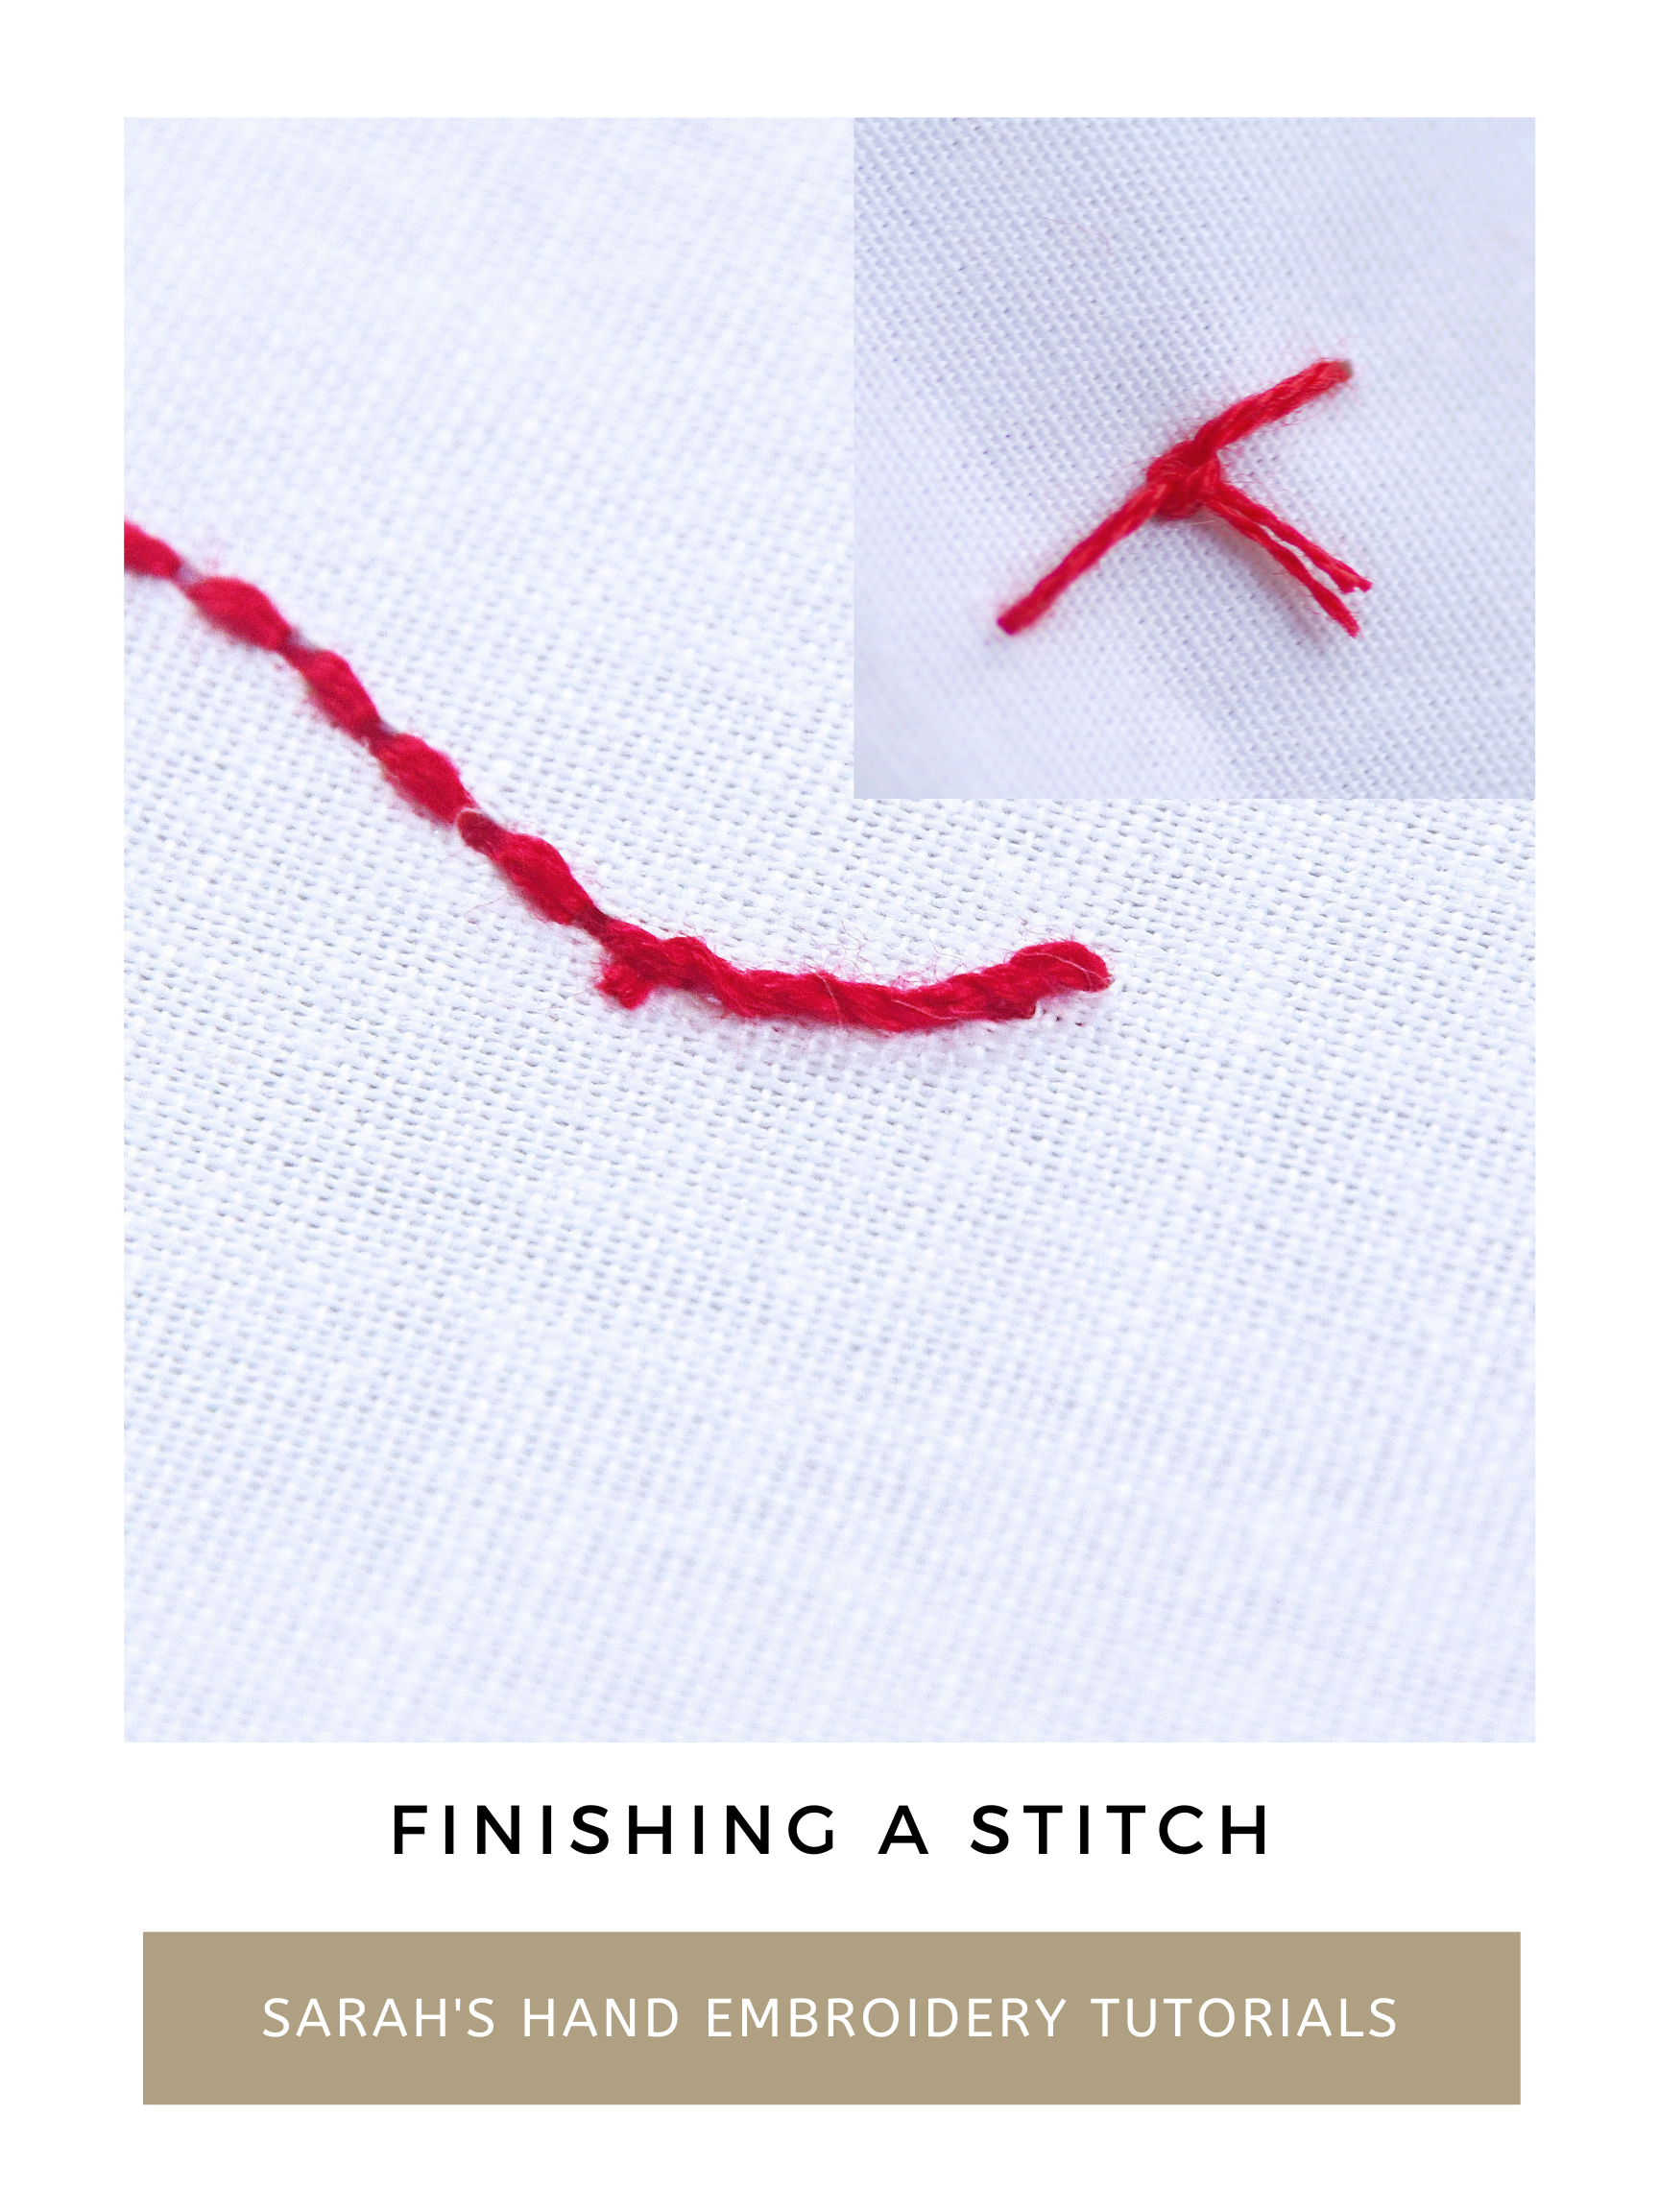 Every Stitch: Updating the process